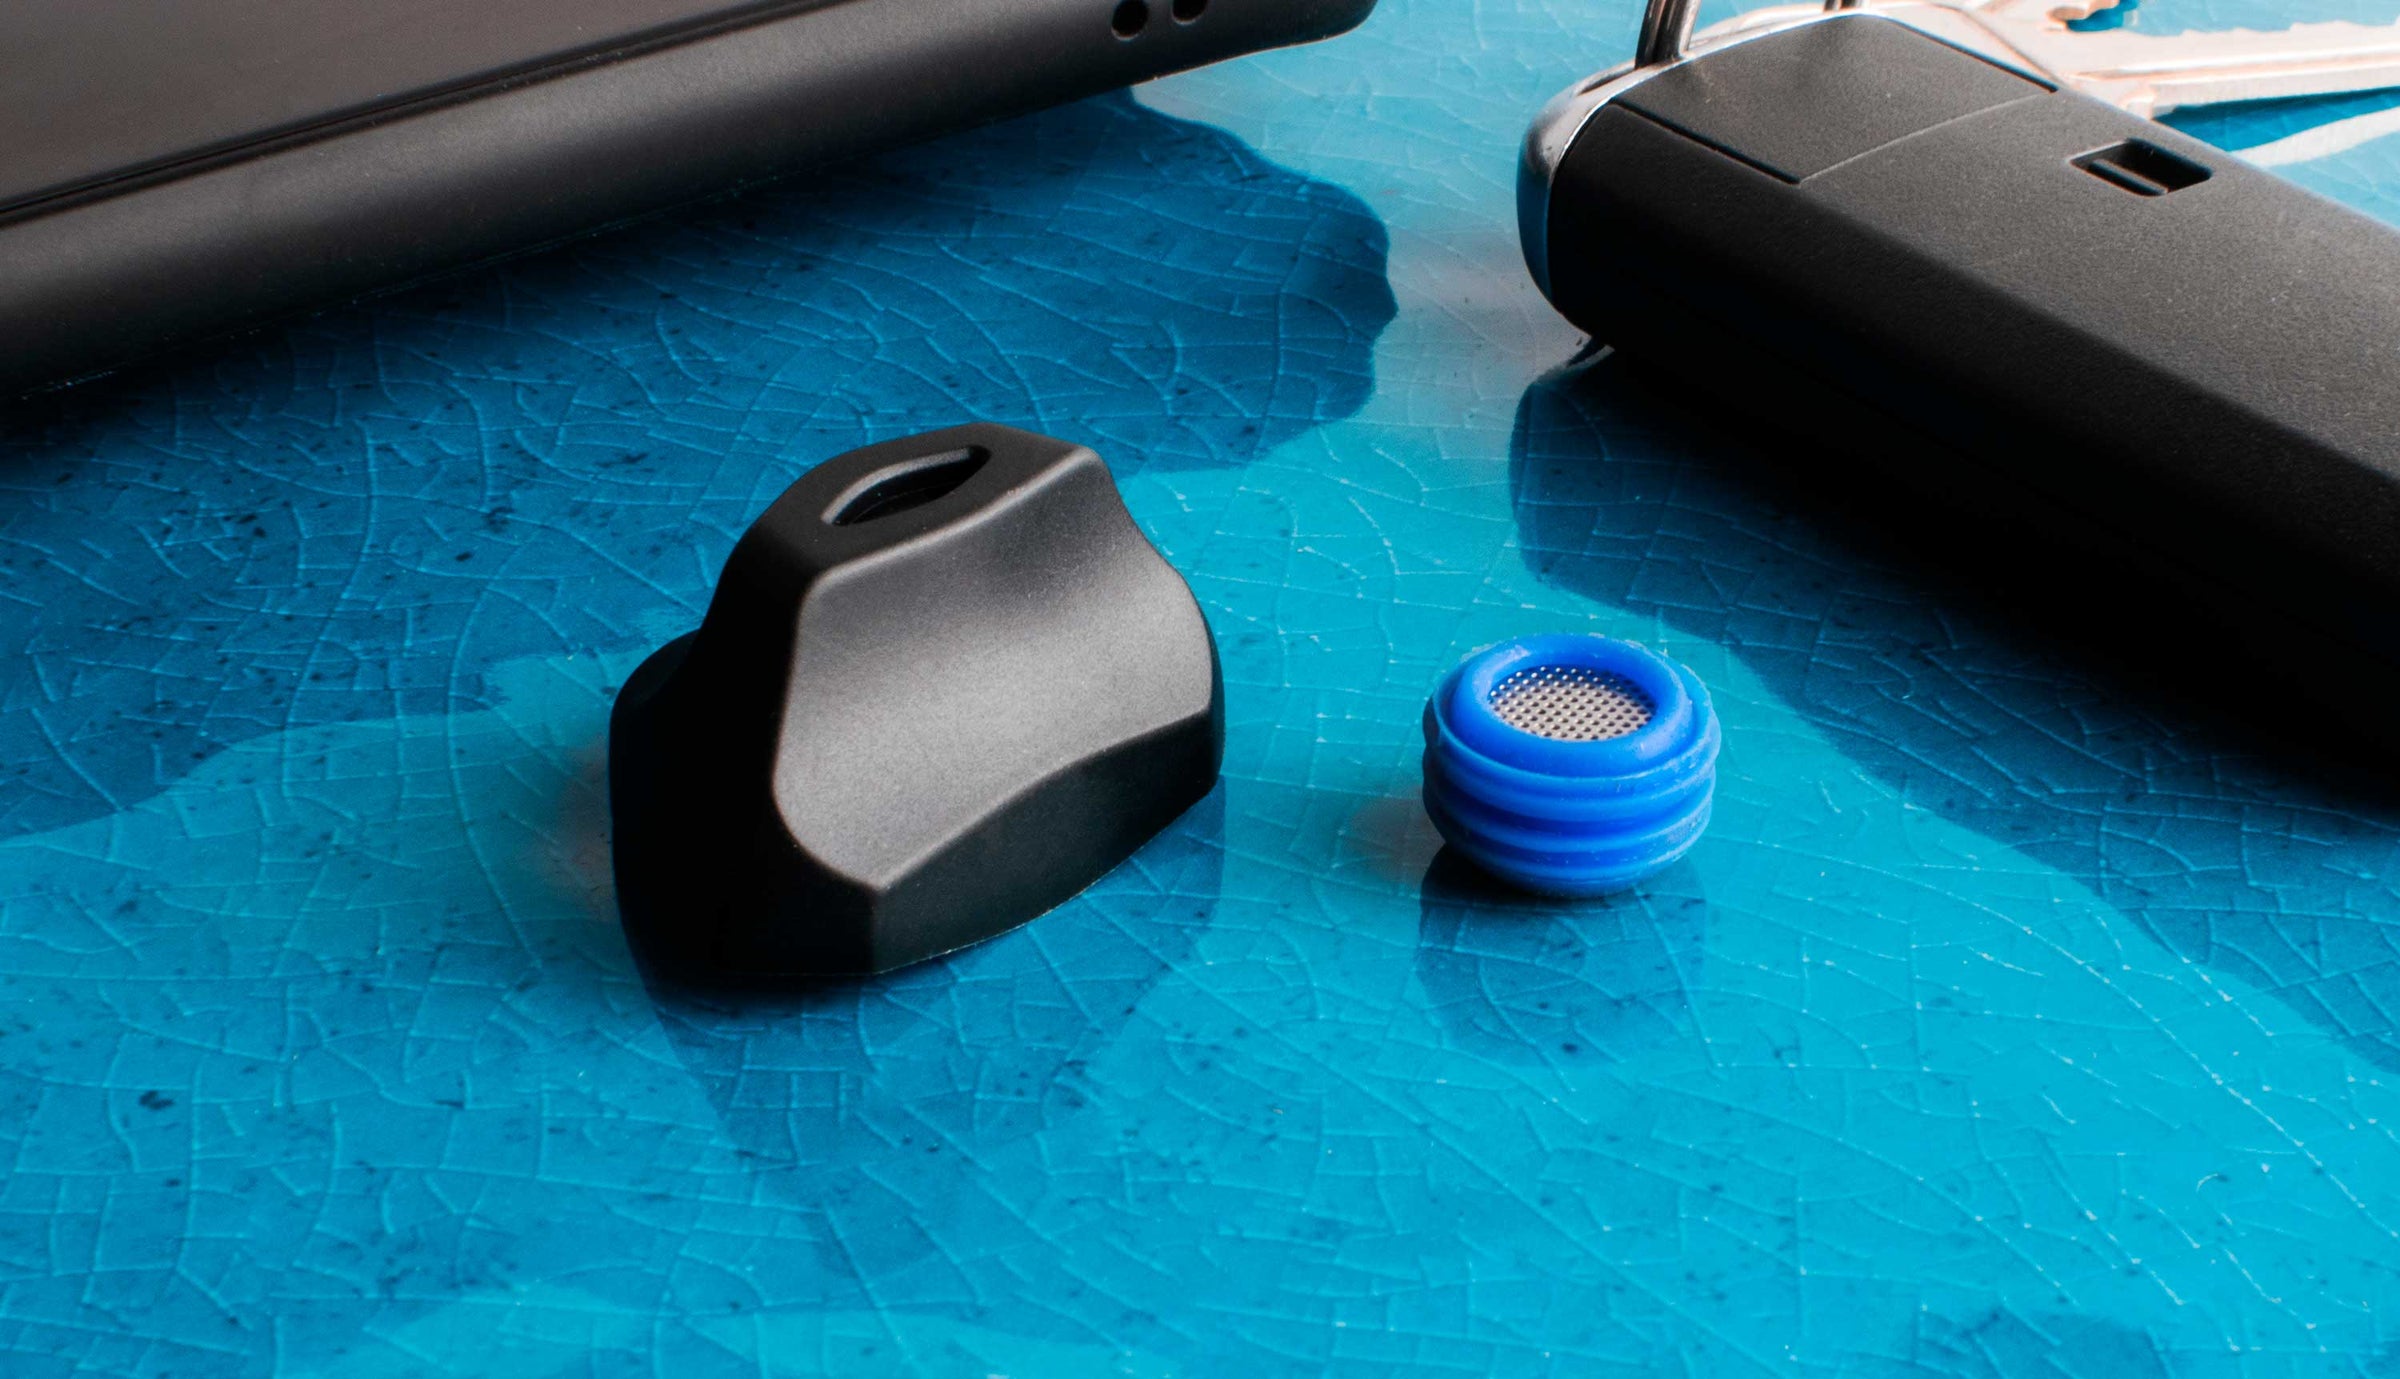 Exxus Mini Plus mouthpiece Replacement part on blue reflective table background